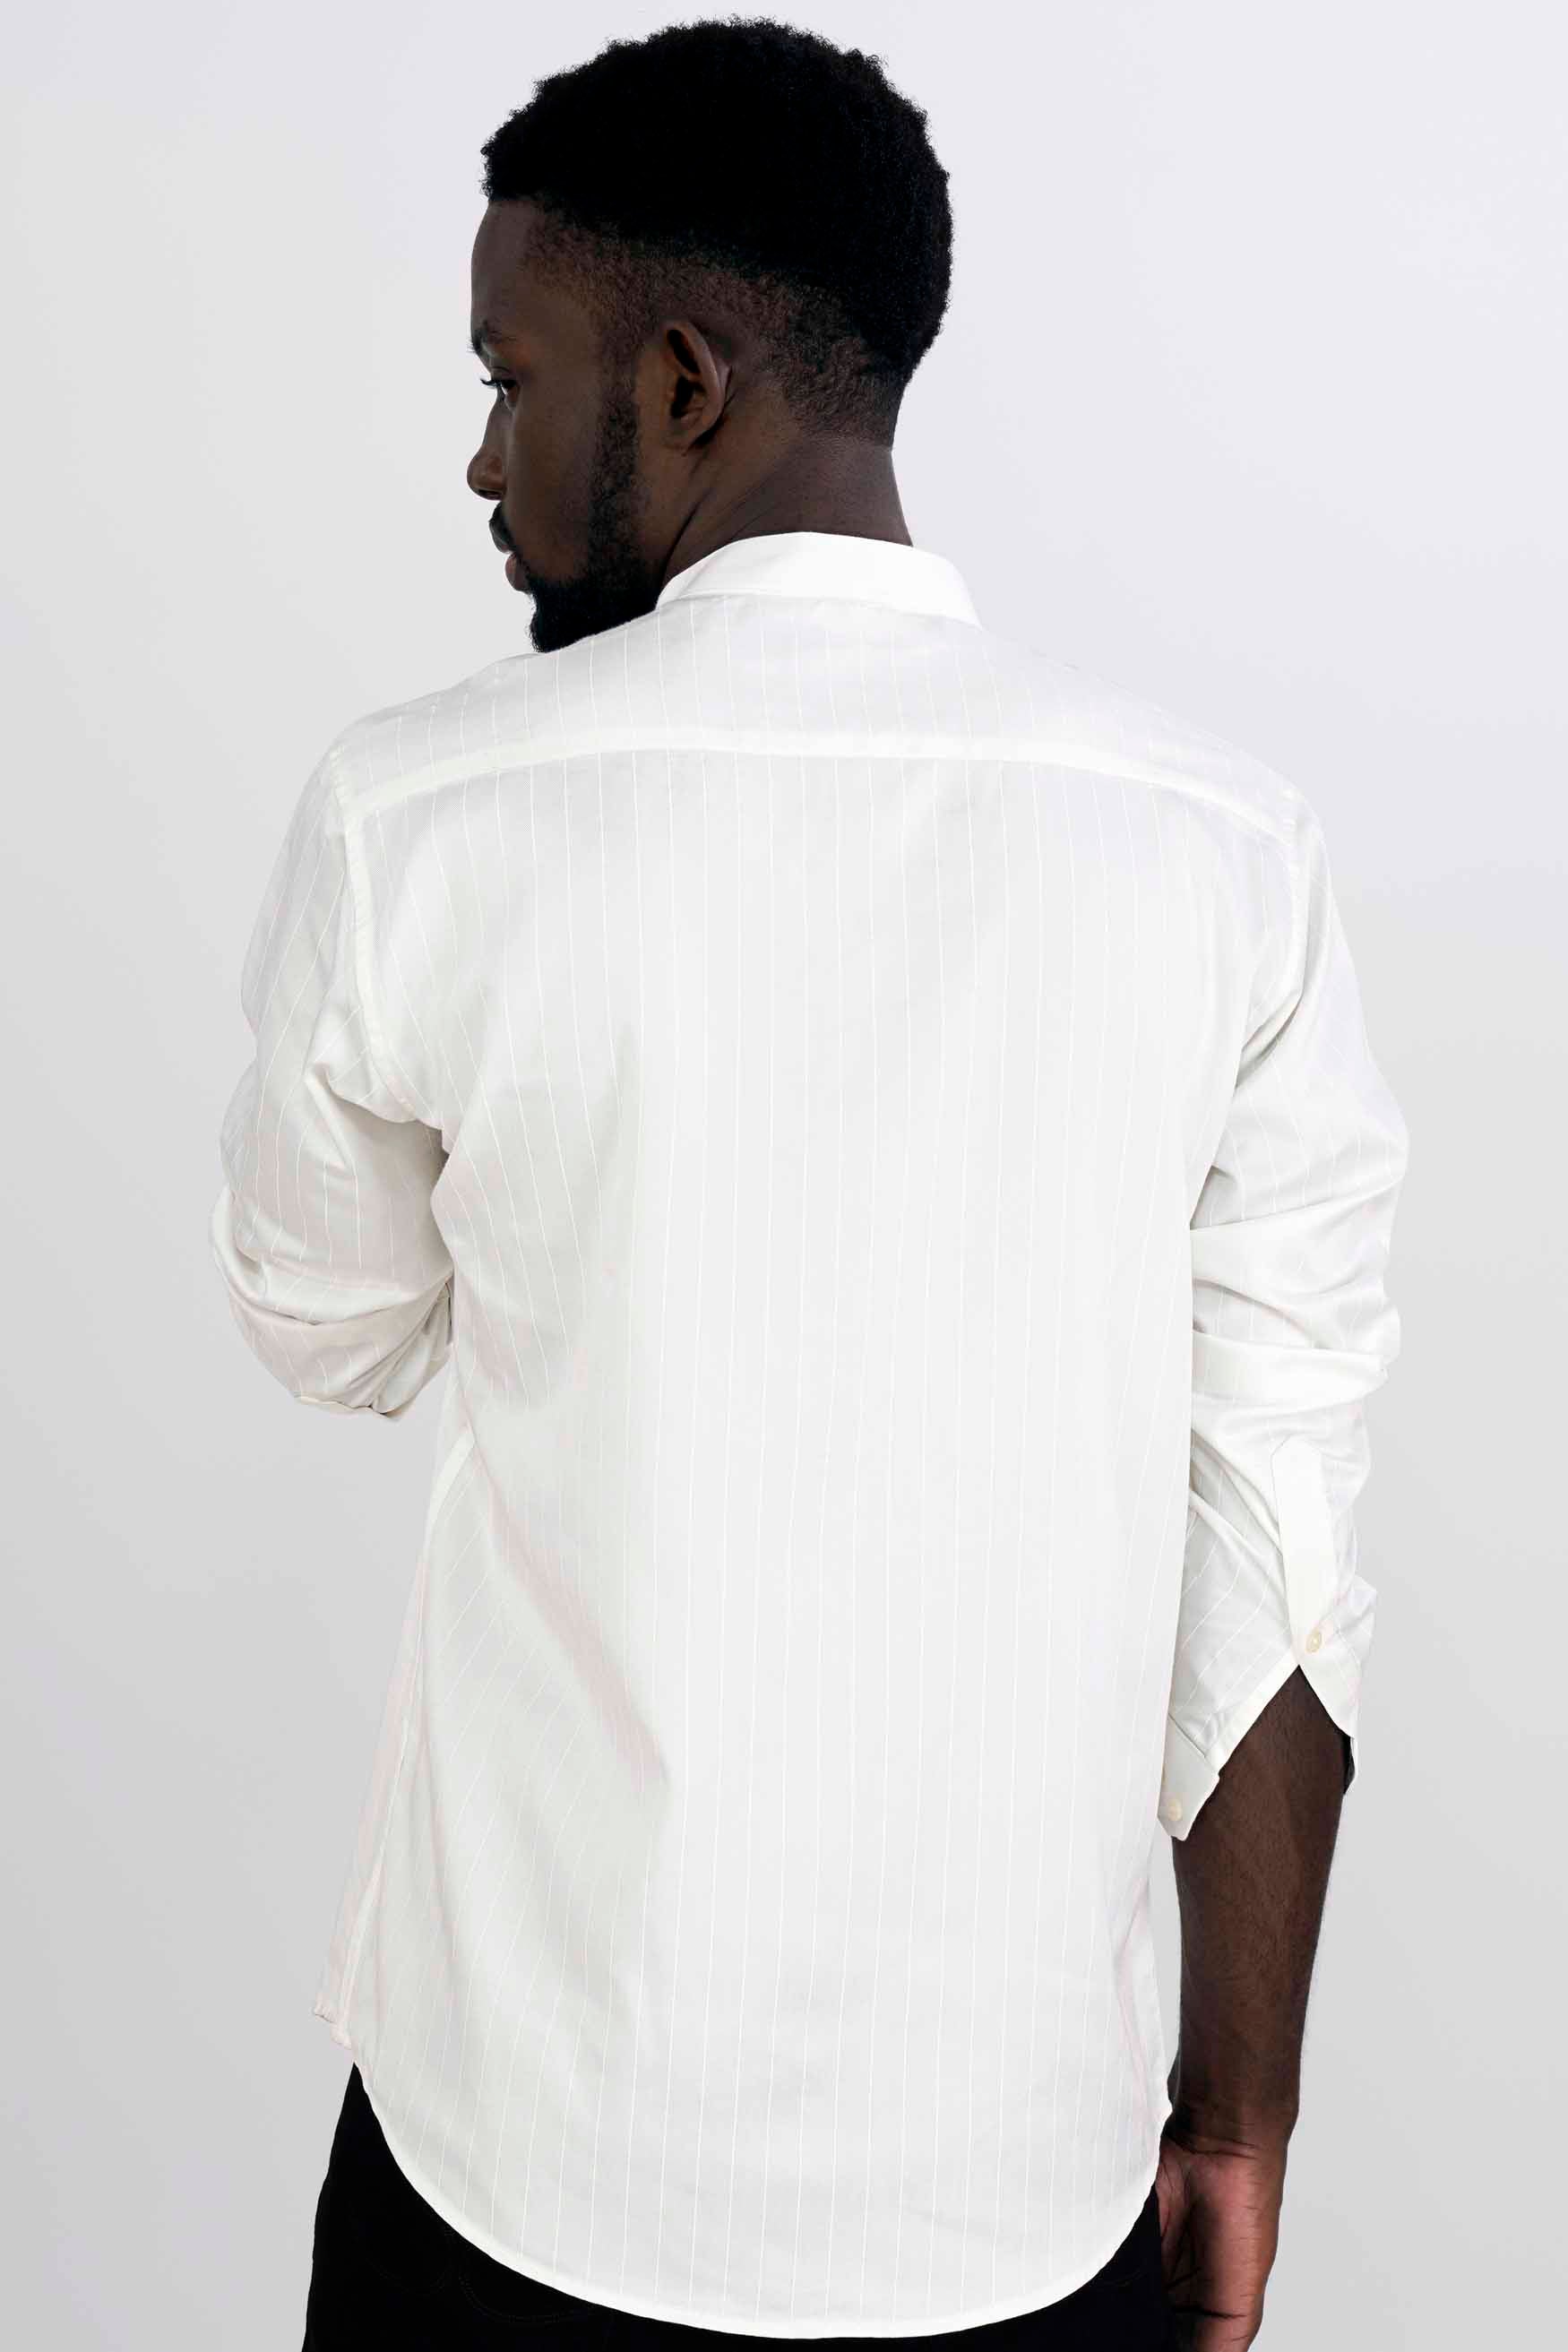 Bright White Subtle Embroidered with Black Embroidered Twill Premium Cotton Designer Shirt 8291-M-E187-38, 8291-M-E187-H-38, 8291-M-E187-39, 8291-M-E187-H-39, 8291-M-E187-40, 8291-M-E187-H-40, 8291-M-E187-42, 8291-M-E187-H-42, 8291-M-E187-44, 8291-M-E187-H-44, 8291-M-E187-46, 8291-M-E187-H-46, 8291-M-E187-48, 8291-M-E187-H-48, 8291-M-E187-50, 8291-M-E187-H-50, 8291-M-E187-52, 8291-M-E187-H-52